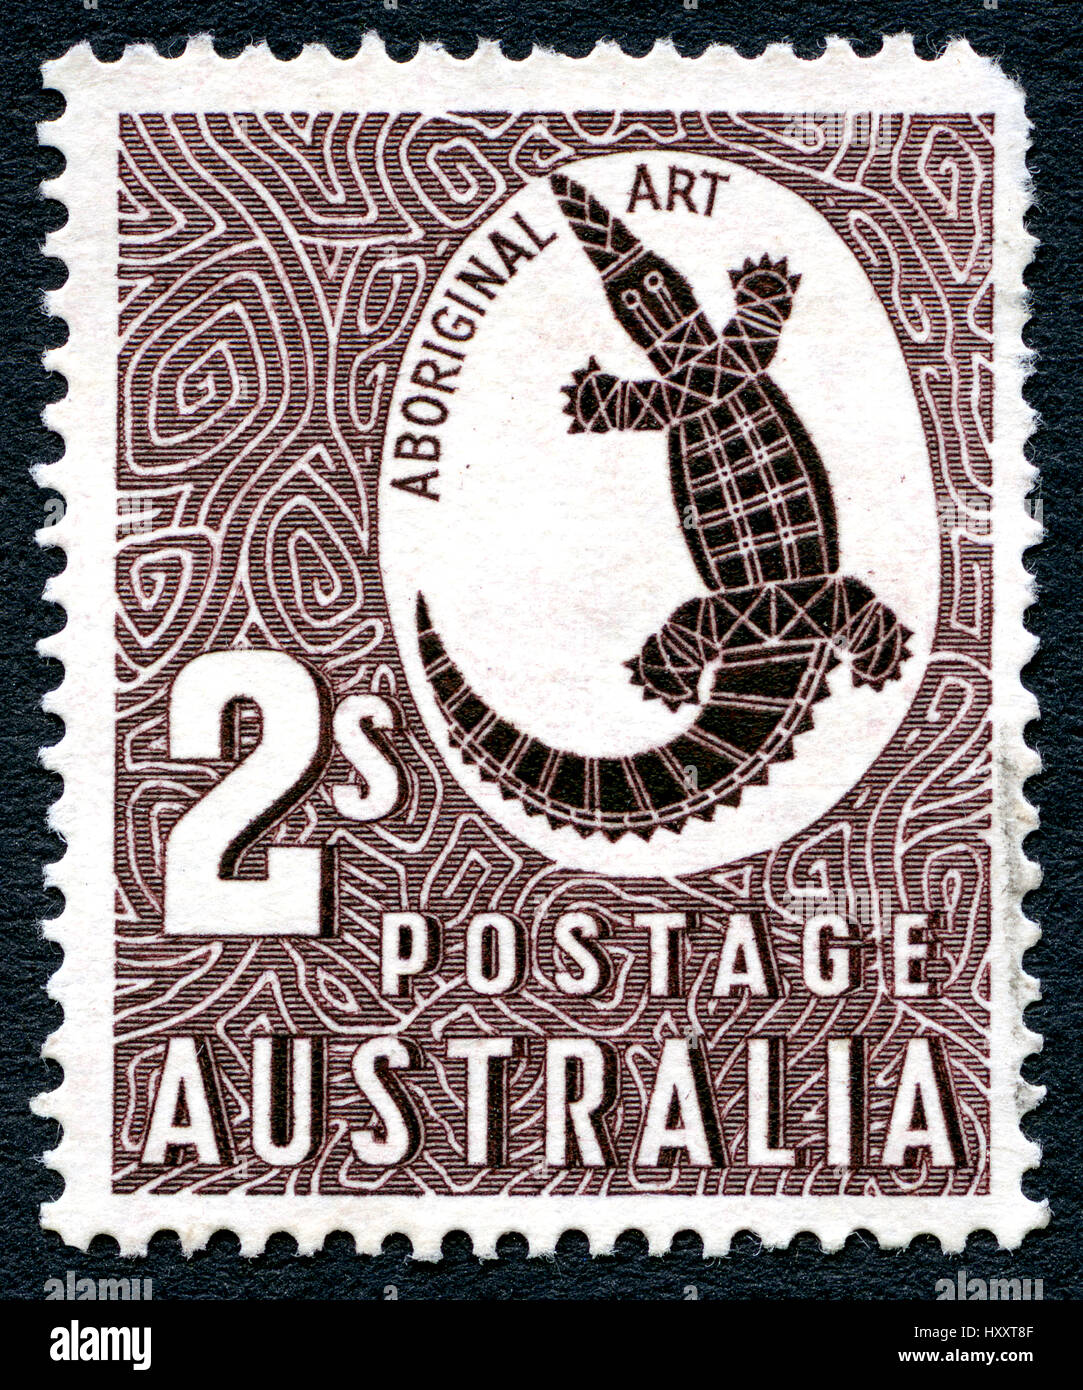 AUSTRALIA - CIRCA 1948: A used postage stamp from Australia, celebrating Aboriginal Art, circa 1948. Stock Photo